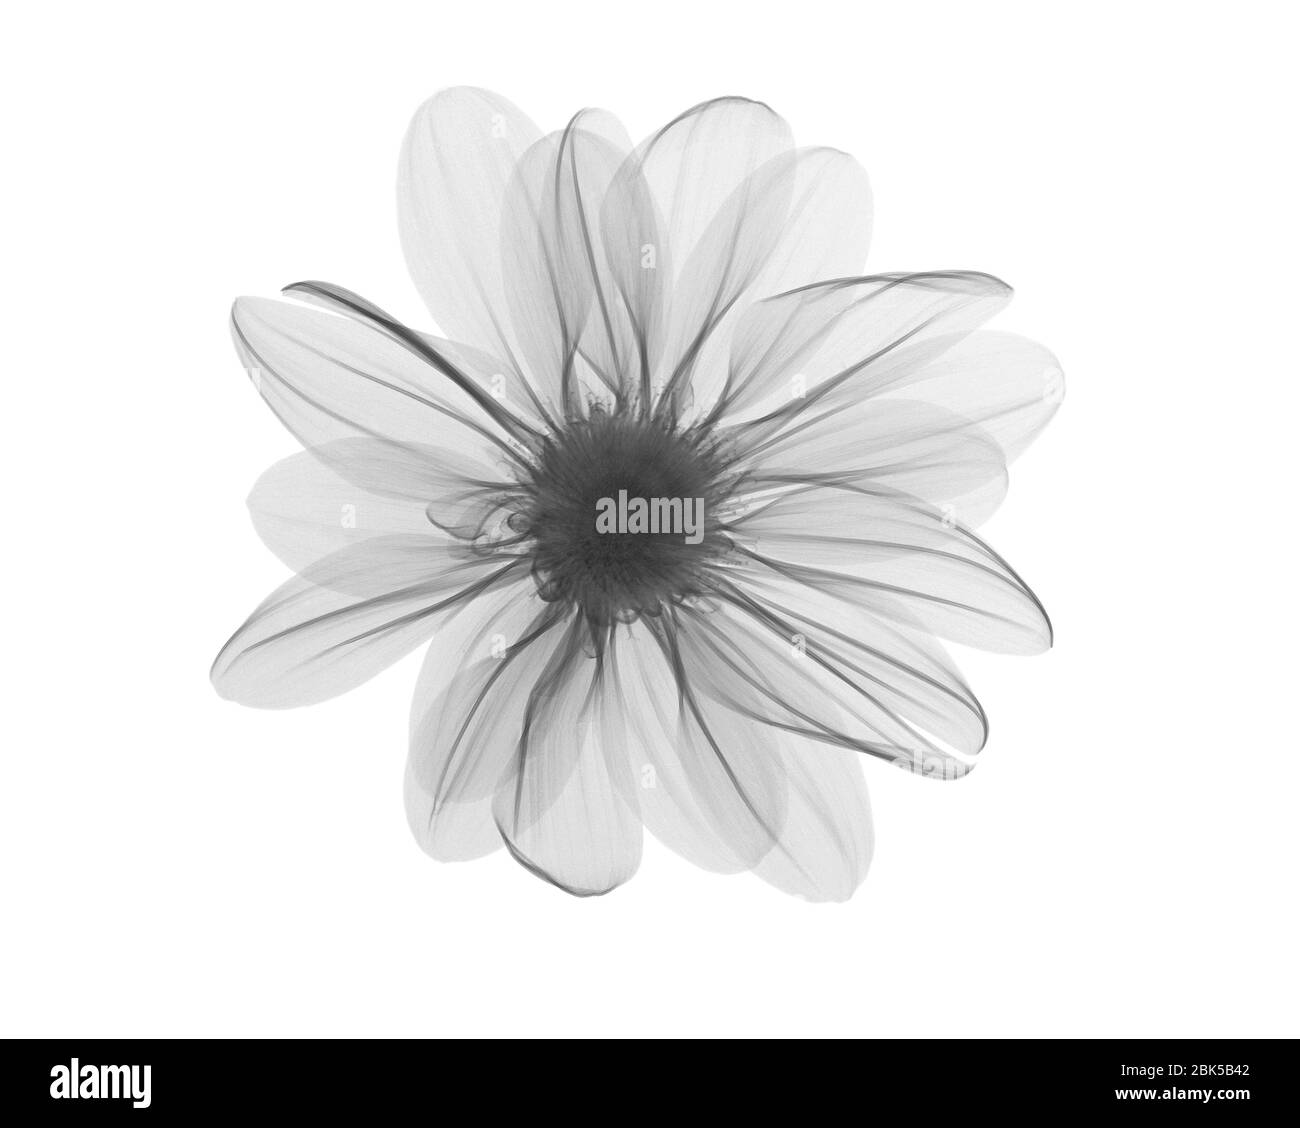 Michaelmas daisy (Aster amellus) cabeza de flor, rayos X. Foto de stock